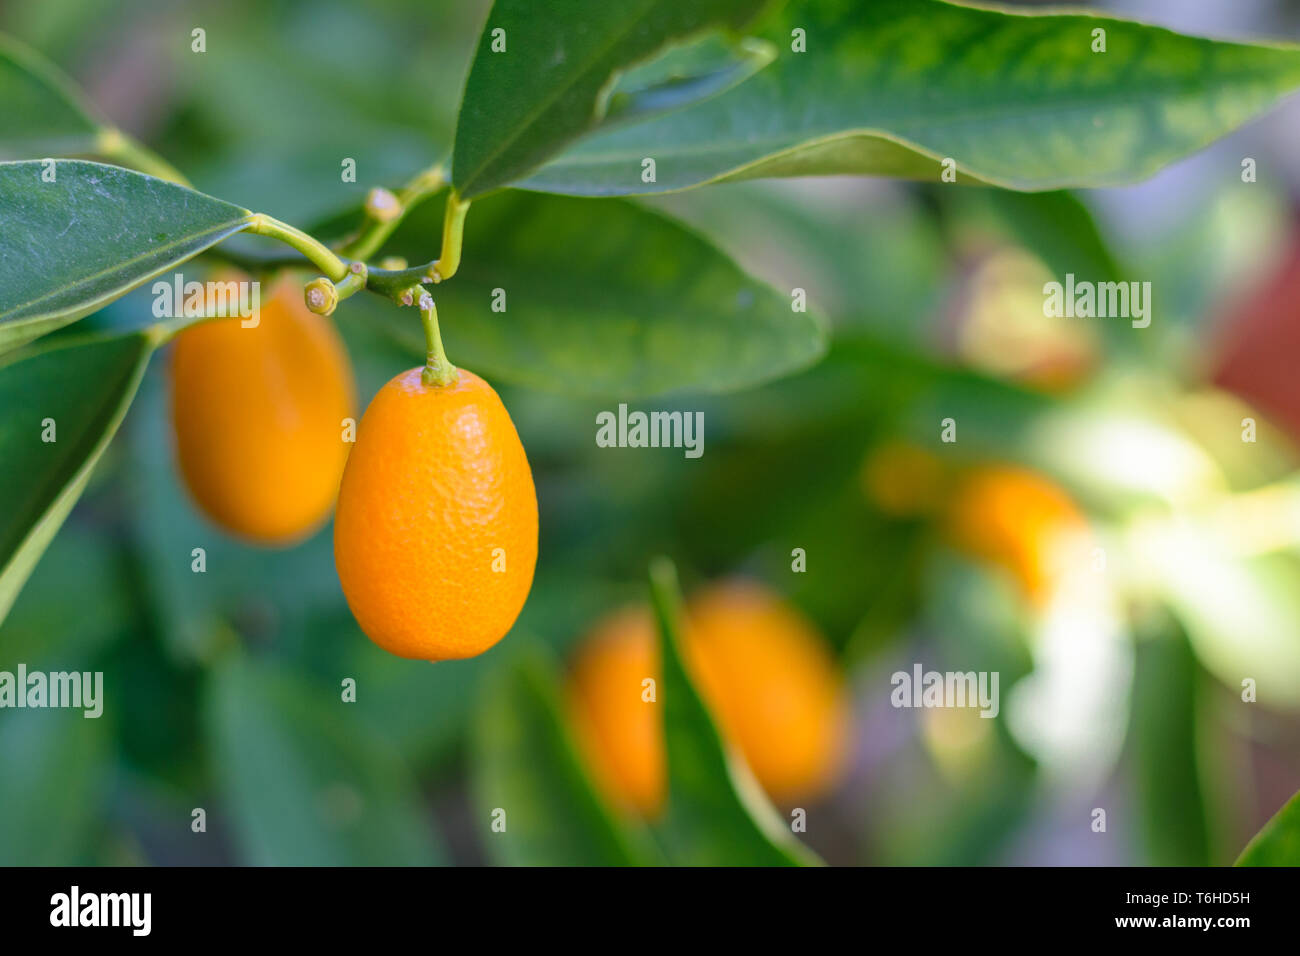 Kumquats (cumquats, Citrus japonica) fruits hanging on a branch Stock Photo